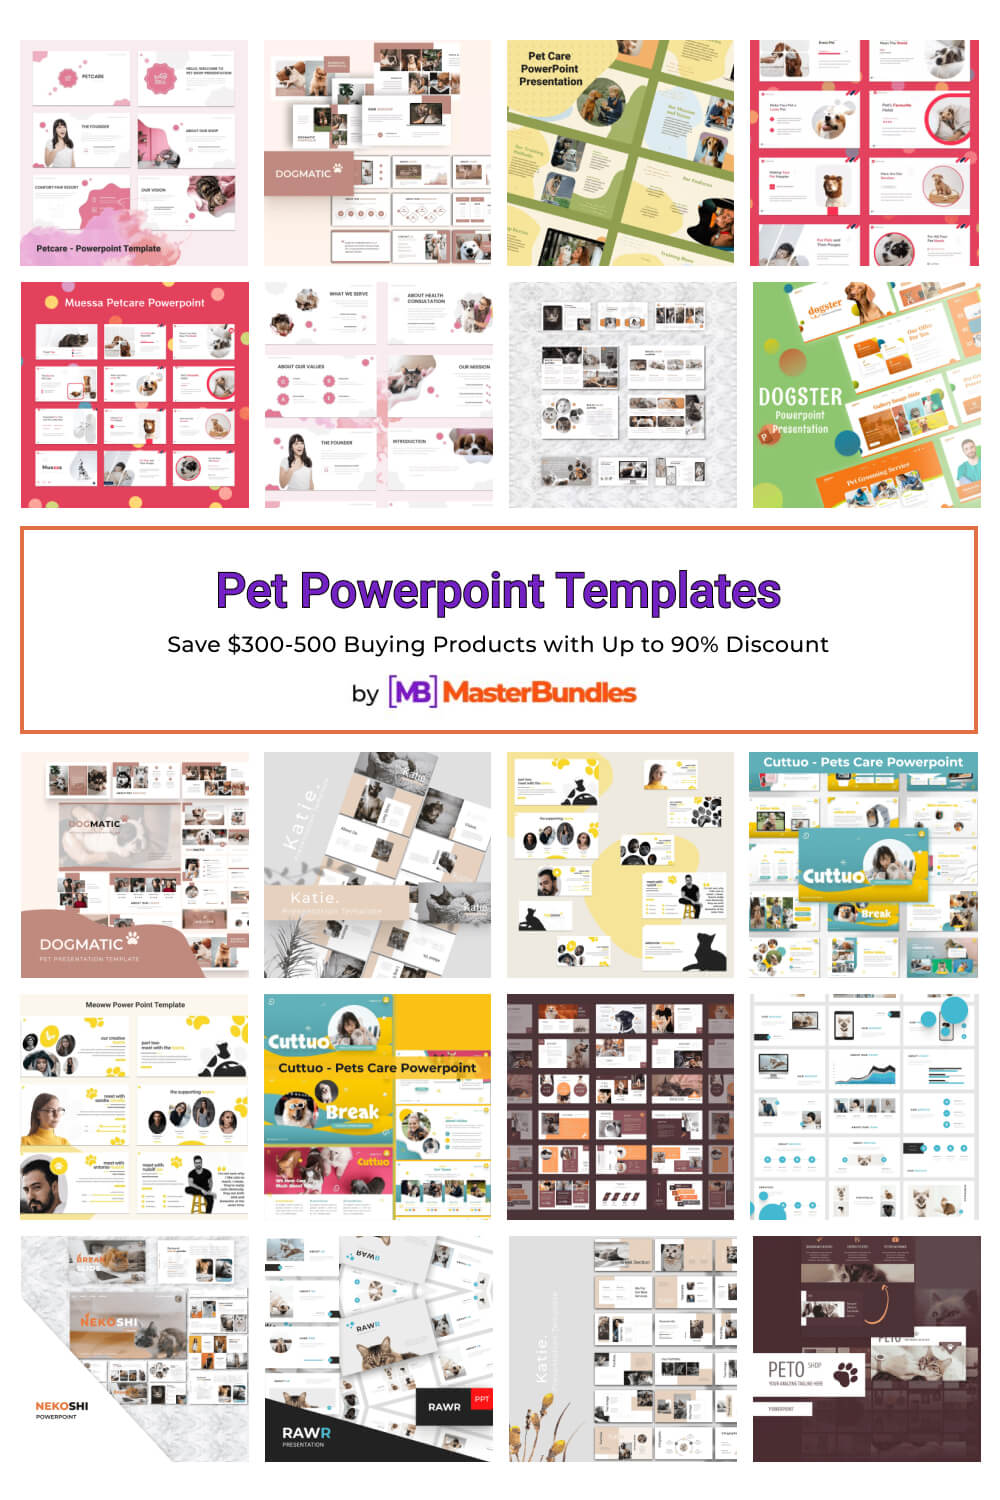 pet powerpoint templates pinterest image.